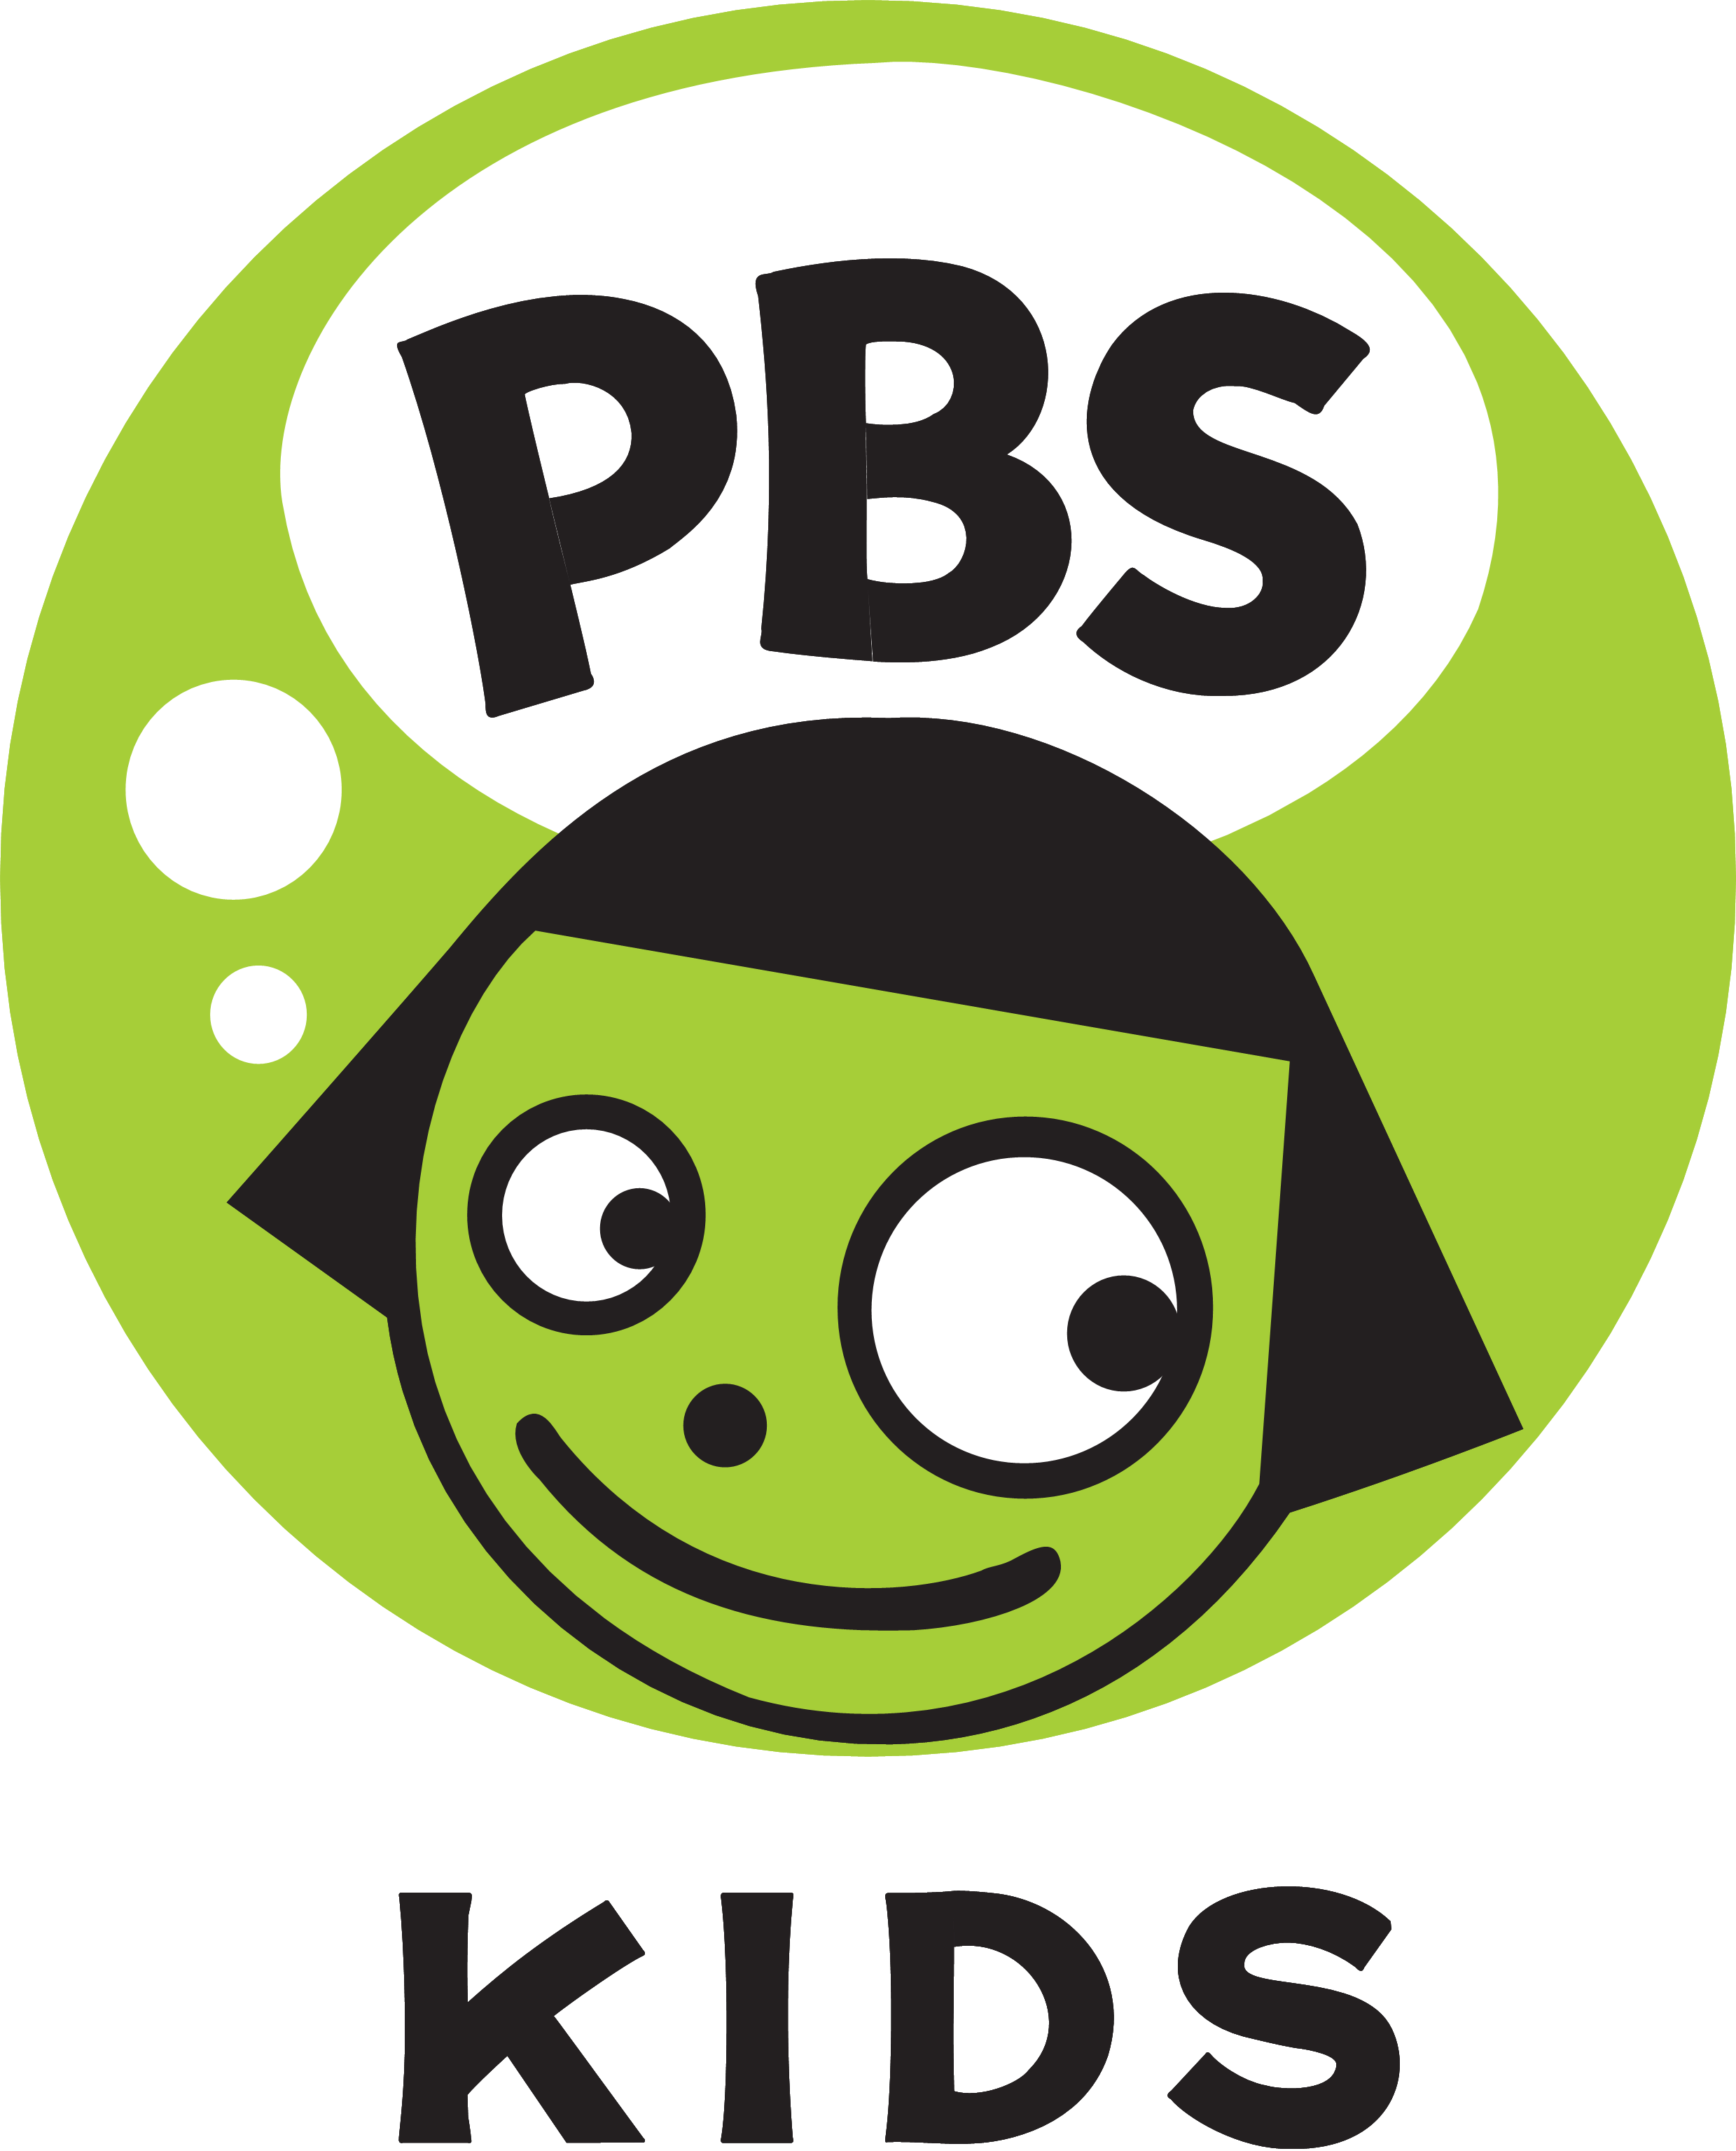 Image - PBS Kids Logo Dot.svg.png - Logopedia, the logo and branding site